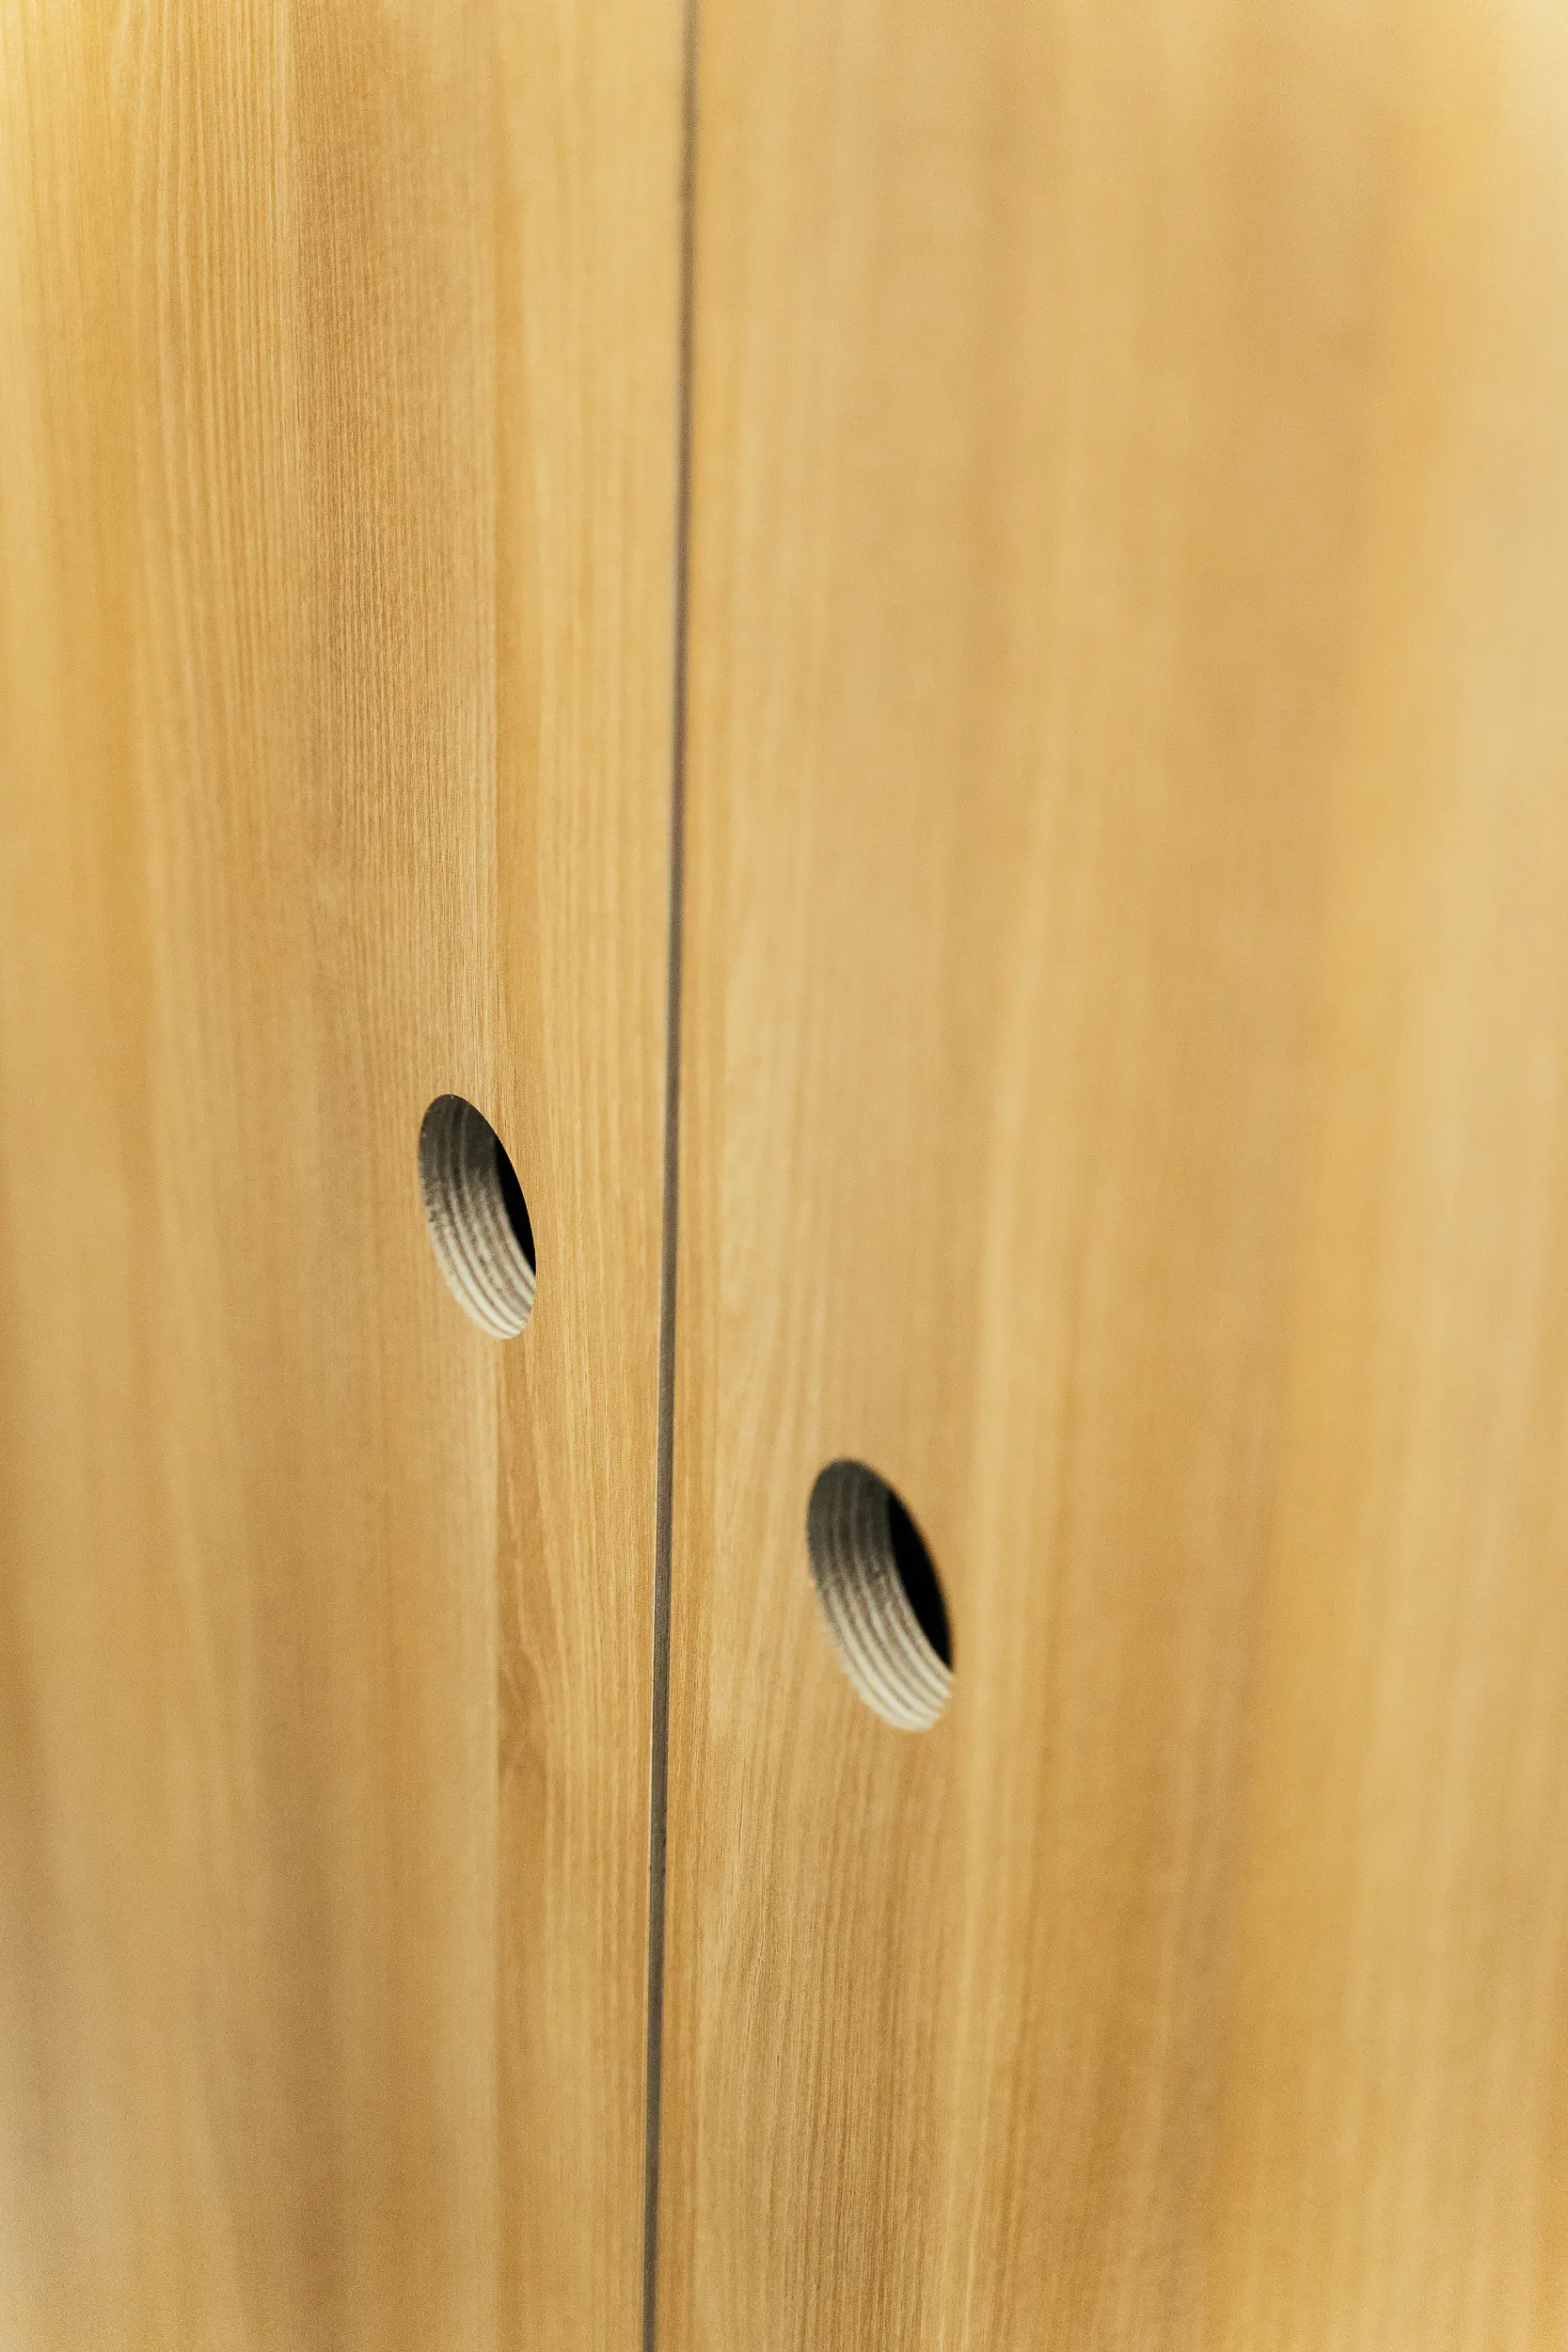 everything's fine storage cabinets door handle detail